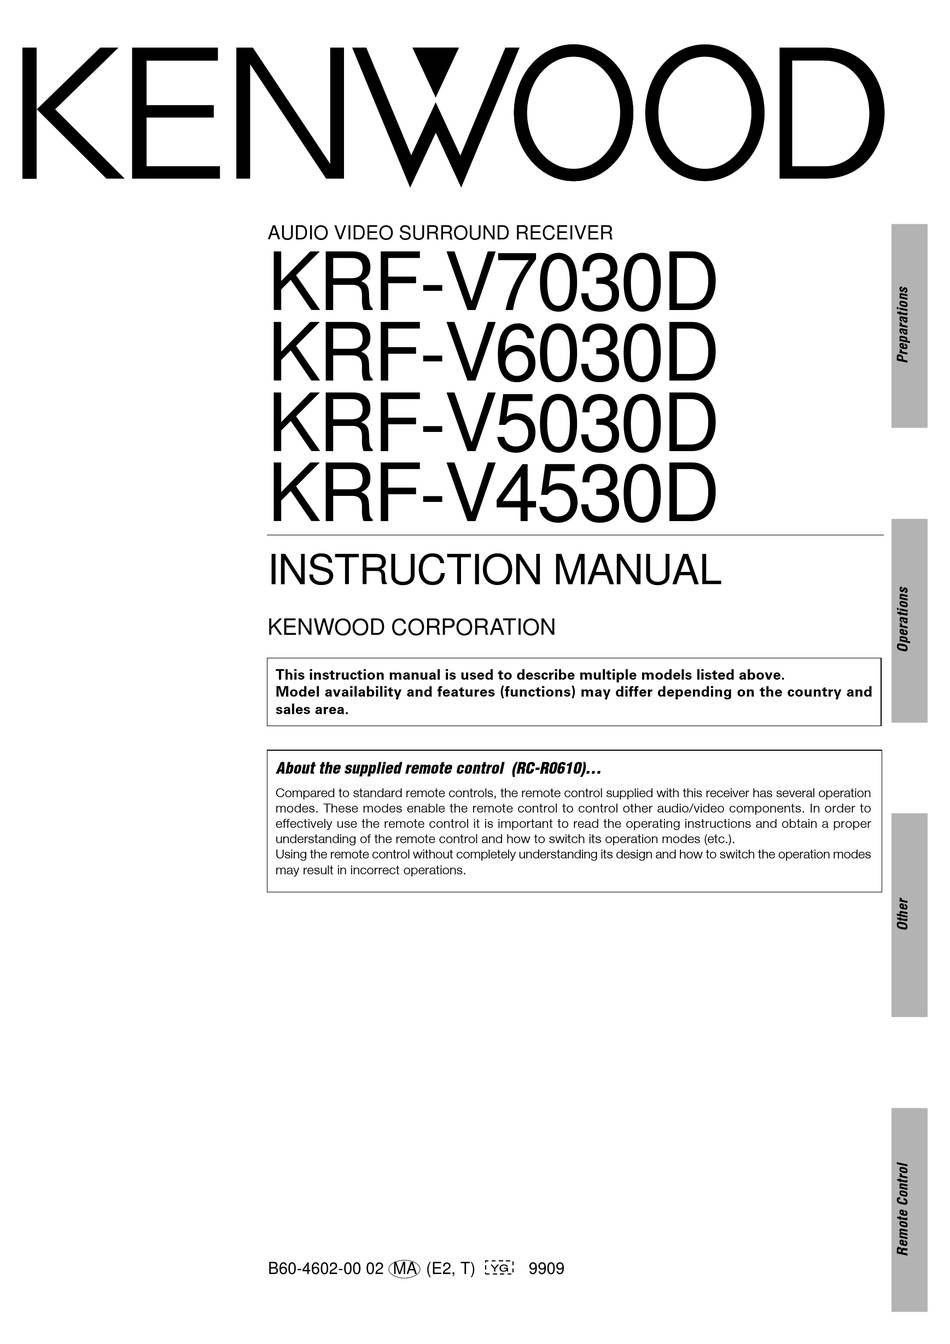 Kenwood KRF-V6030D